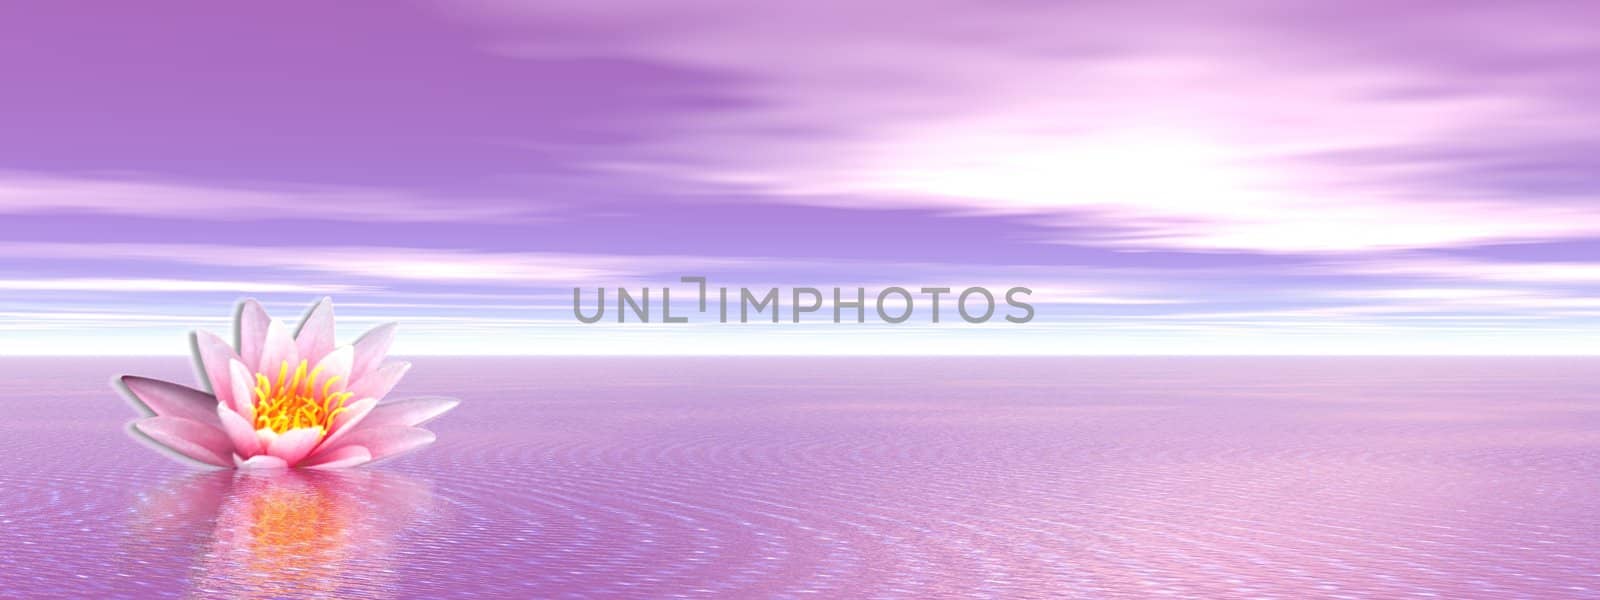 Lily flower in violet ocean by Elenaphotos21